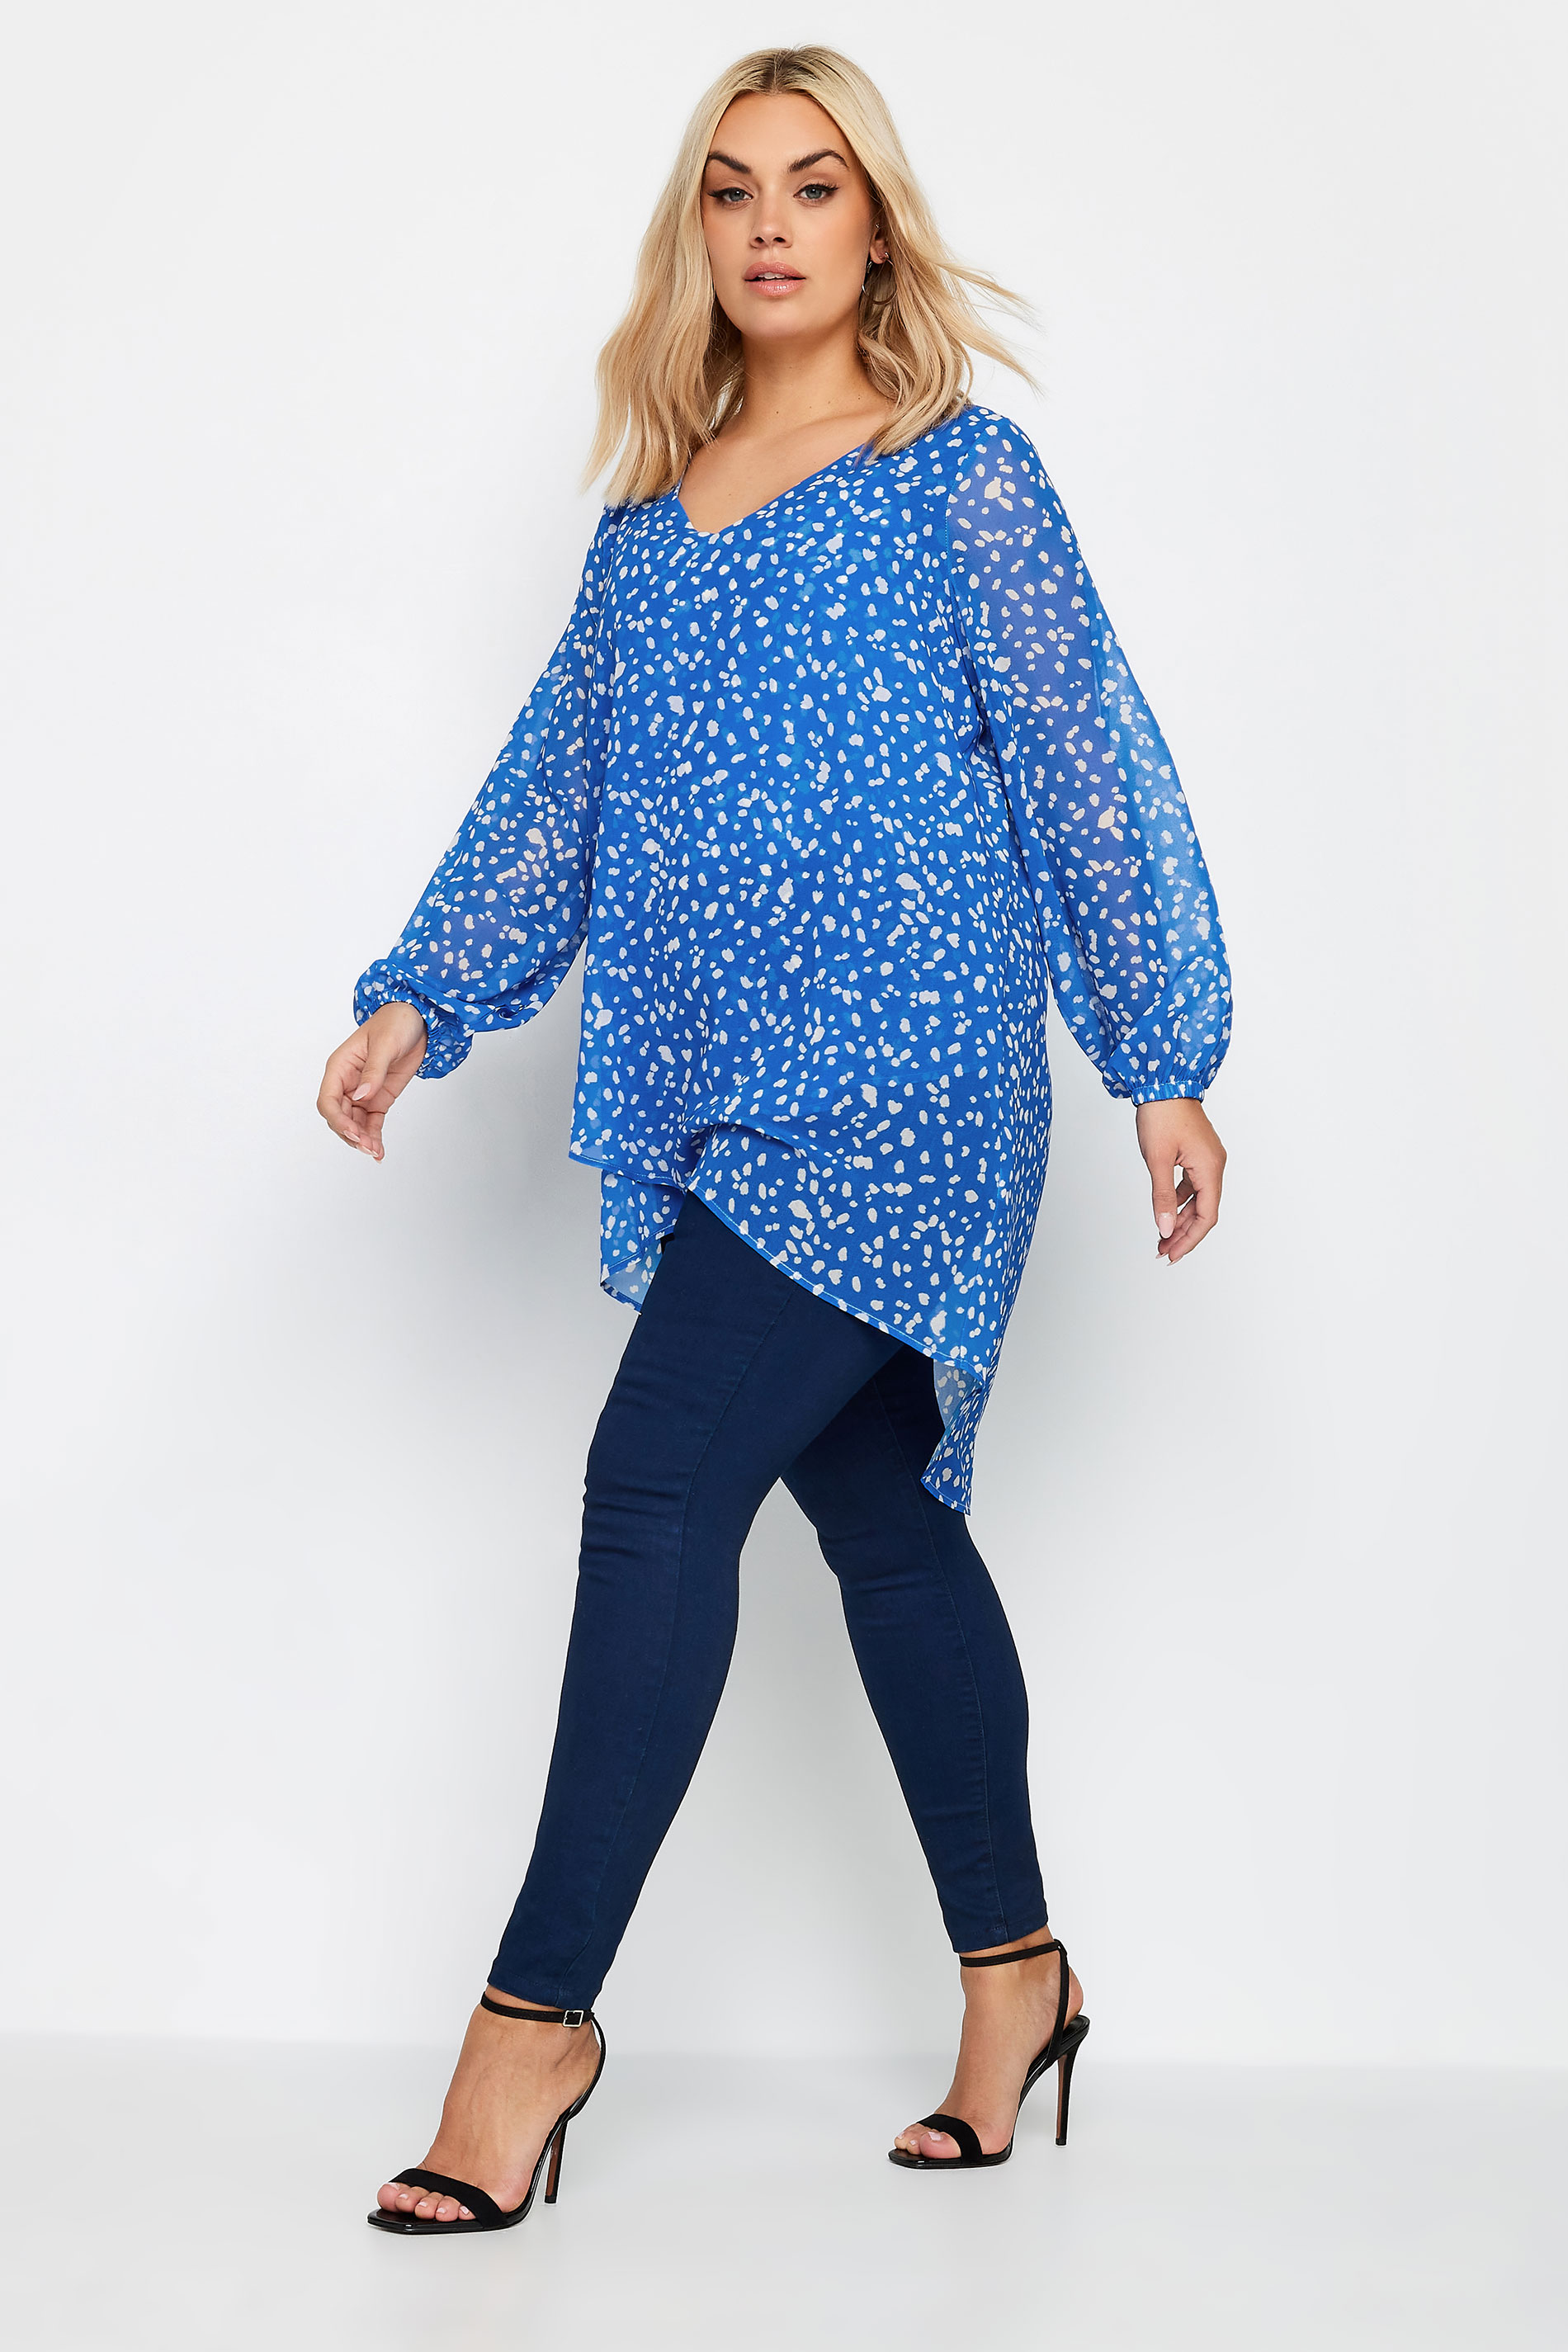 YOURS LONDON Plus Size Blue Dalmatian Print Wrap Front Blouse | Yours Clothing 2